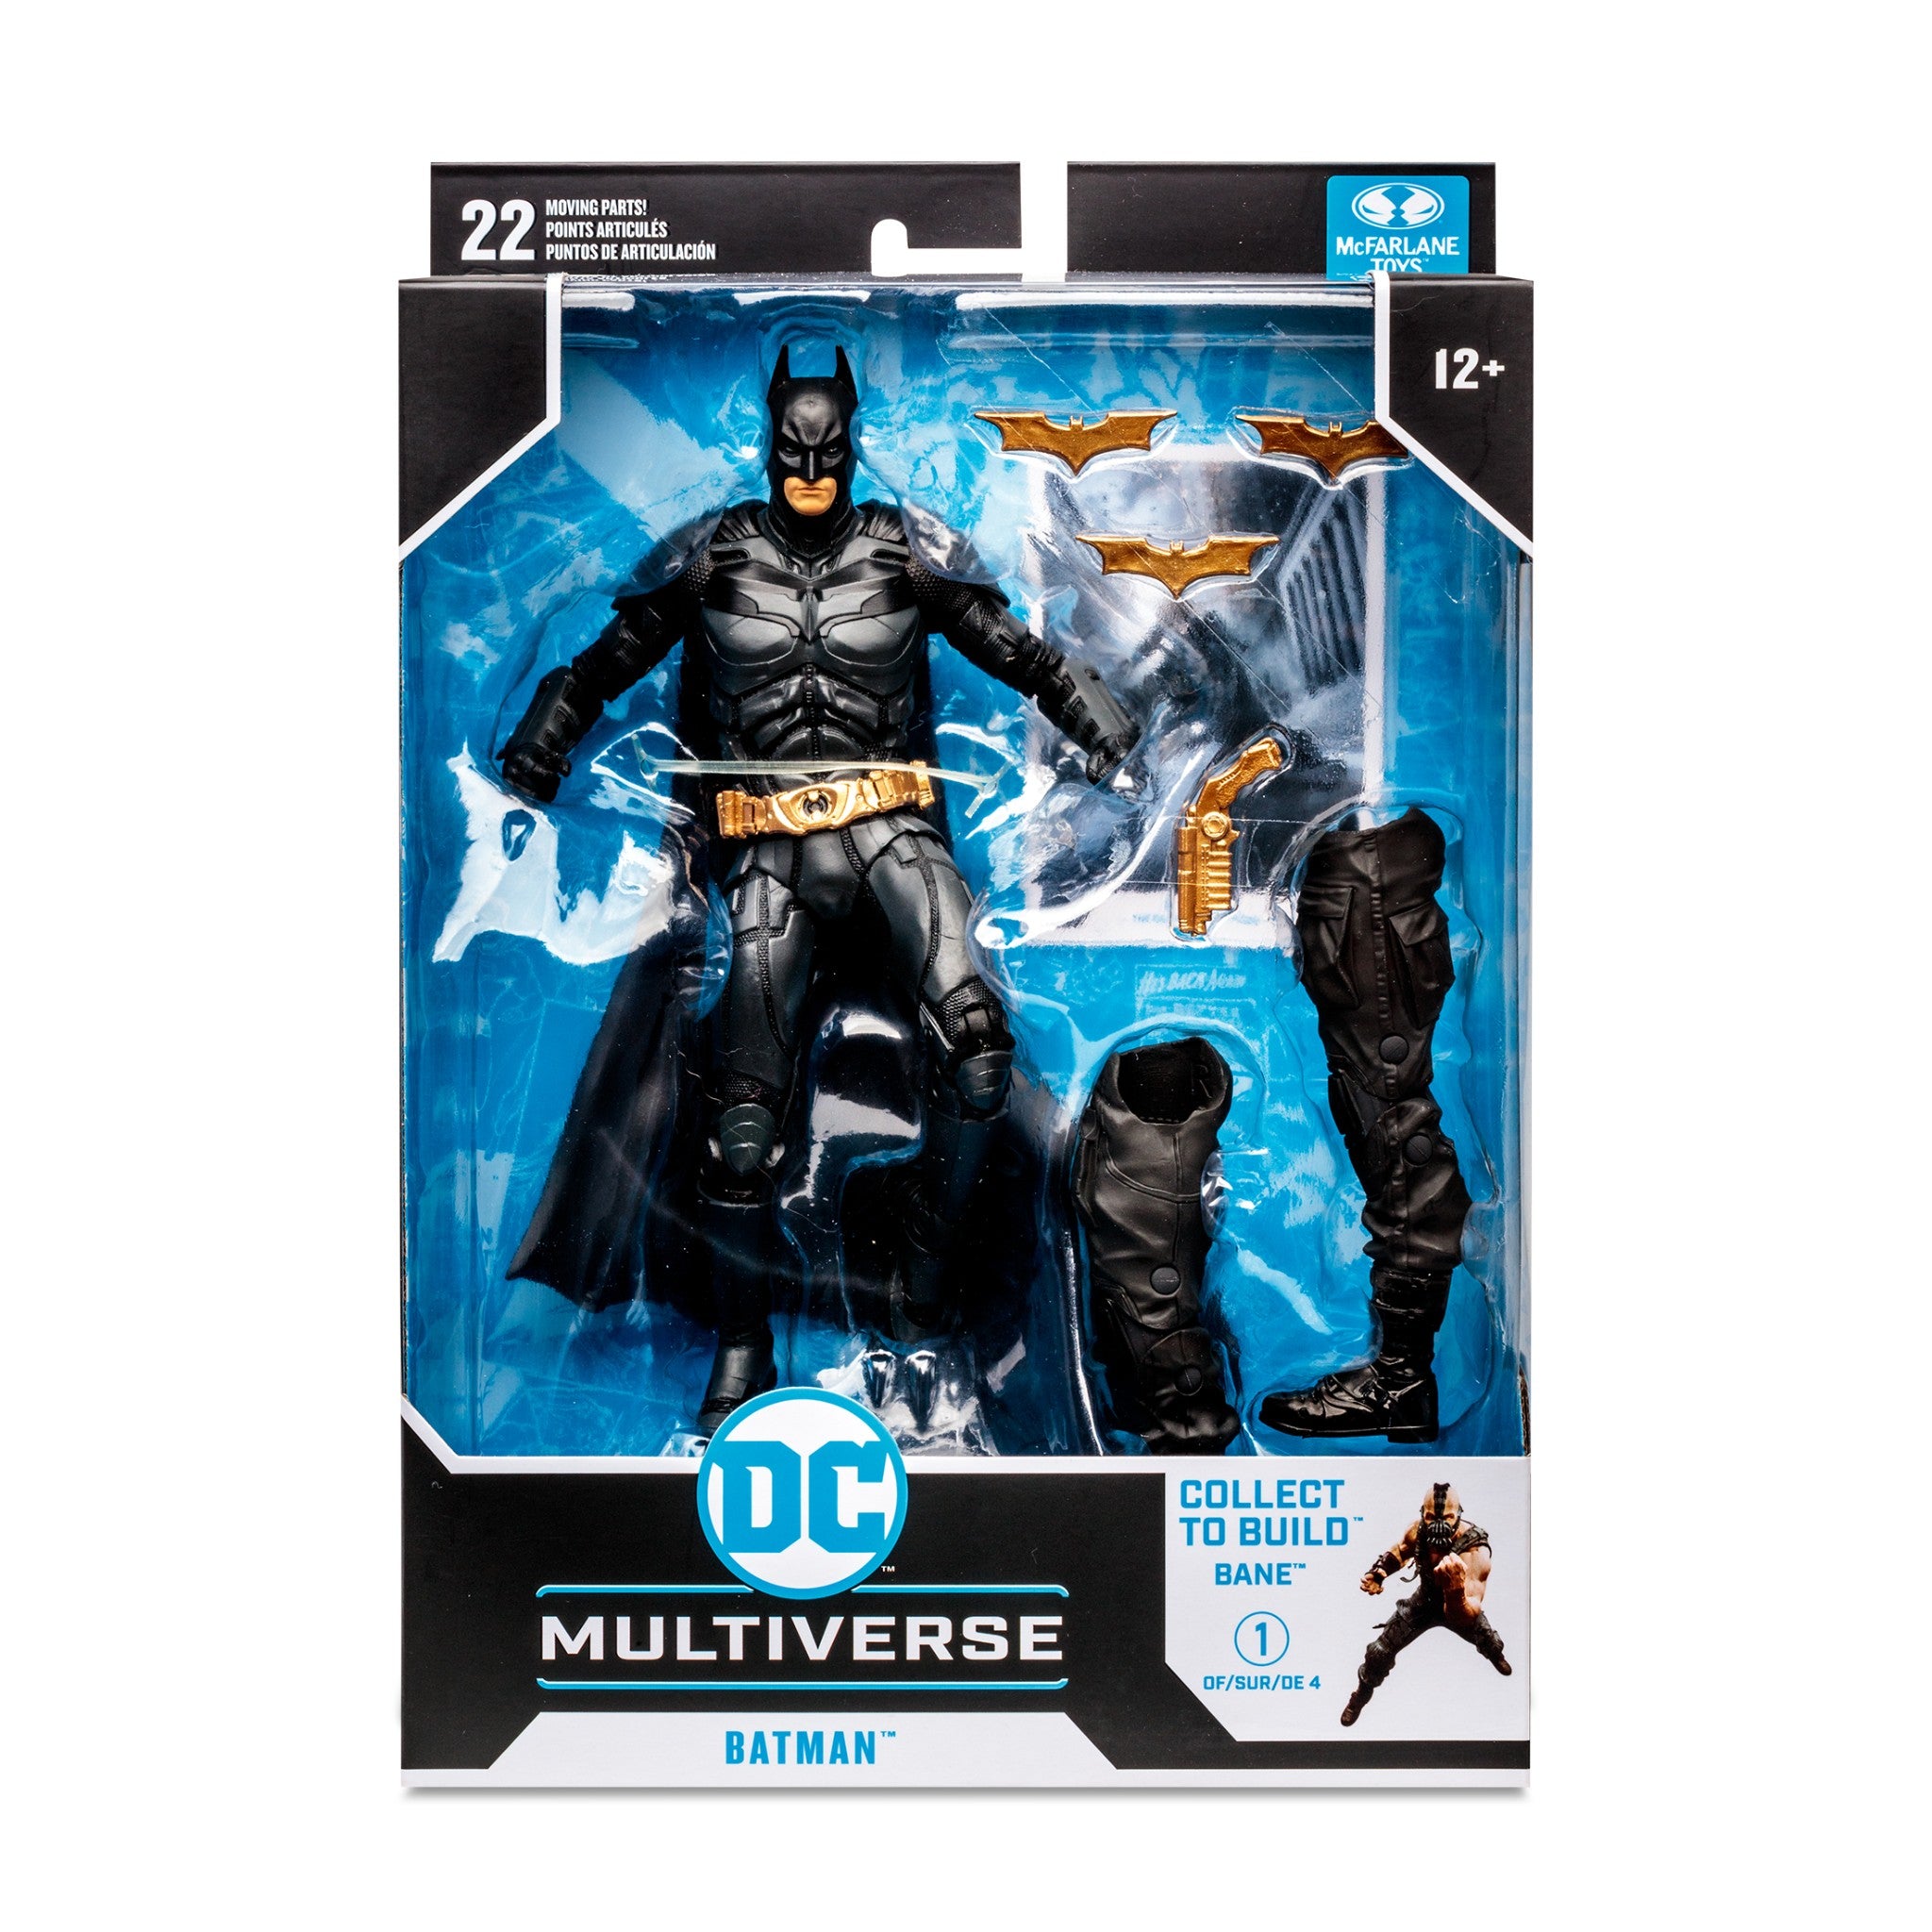 DC Multiverse Dark Knight Trilogy Batman BAF Bane - McFarlane Toys-1